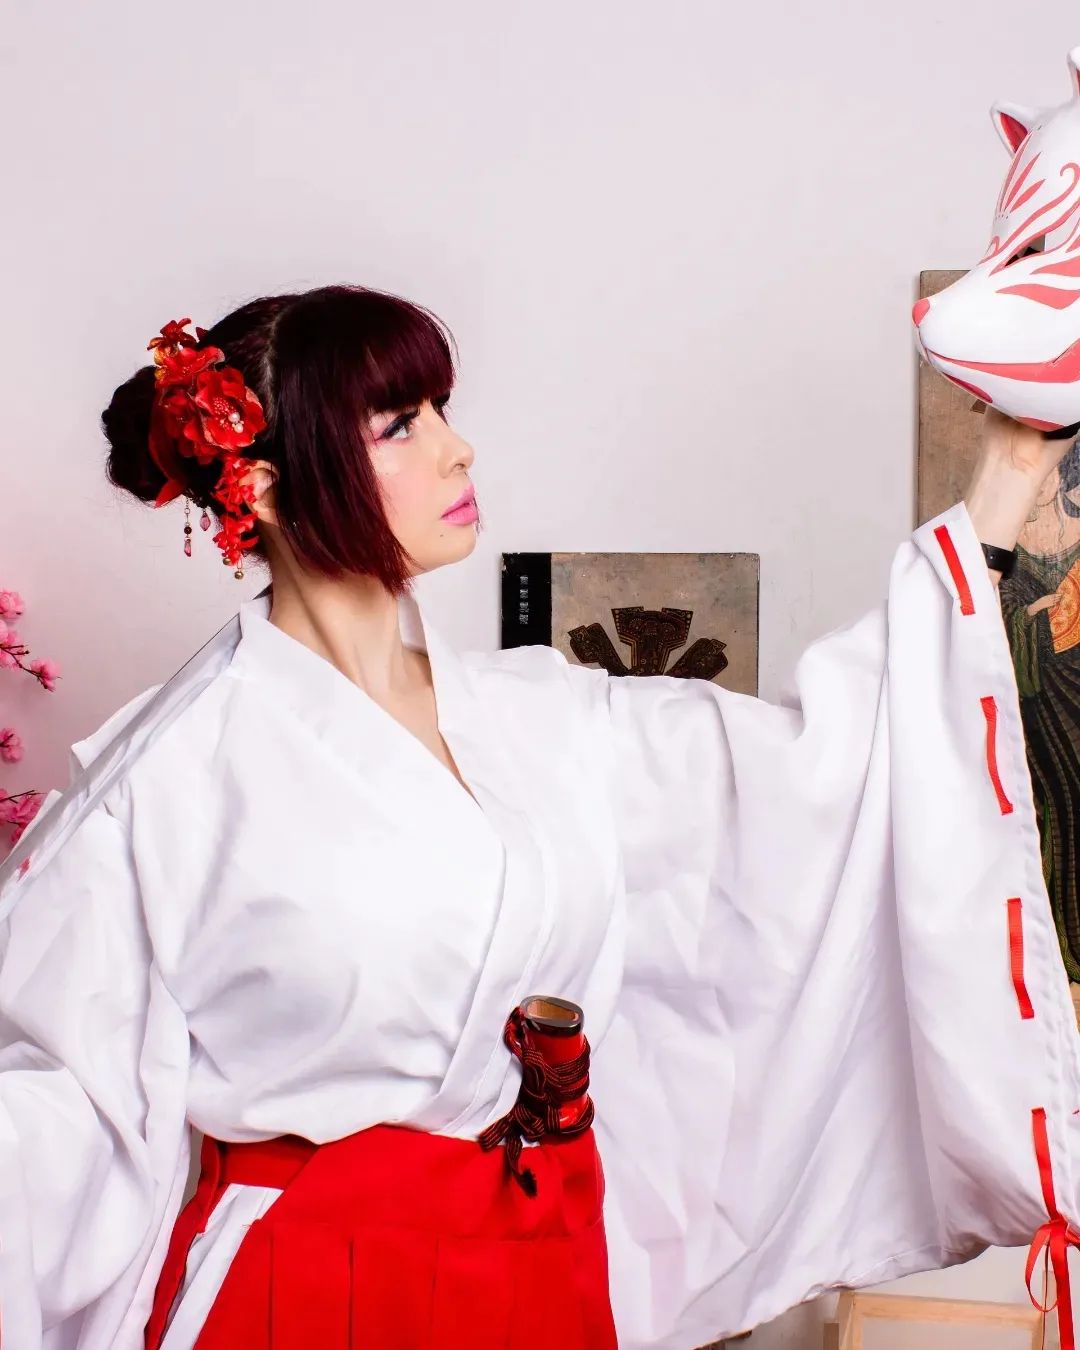 Recordando la visita de la hermosa @marya.vampaia vestida en kimono, como geisha y sacerdotisa.
No dejes pasar la oportunidad de tener tus fotos de amigos y pareja con sabor japonés!!!

Lente de @ziemmu
.
.
.
.
.
.
.
.
.
.
.
.
.
.
.
.
.
.
.
.
.
.
.
#sesiondepareja #sesionesfotograficas #sesionfotografica #sesiondeboda #sesiondefotos #sesiondeaniversario #magdalenadelmar #matrimonio #aniversario #amor #estudiofotografico #siemprejuntos #arehpj #amorverdadero #nikkei #tusan #deshonor #sesionesdeestudio #cosplay #cosplaychallenge #geisha #maiko #kimono #kimonostyle #photography #sesionpareja #beautiful #sanvalentin #sanvalentin2024